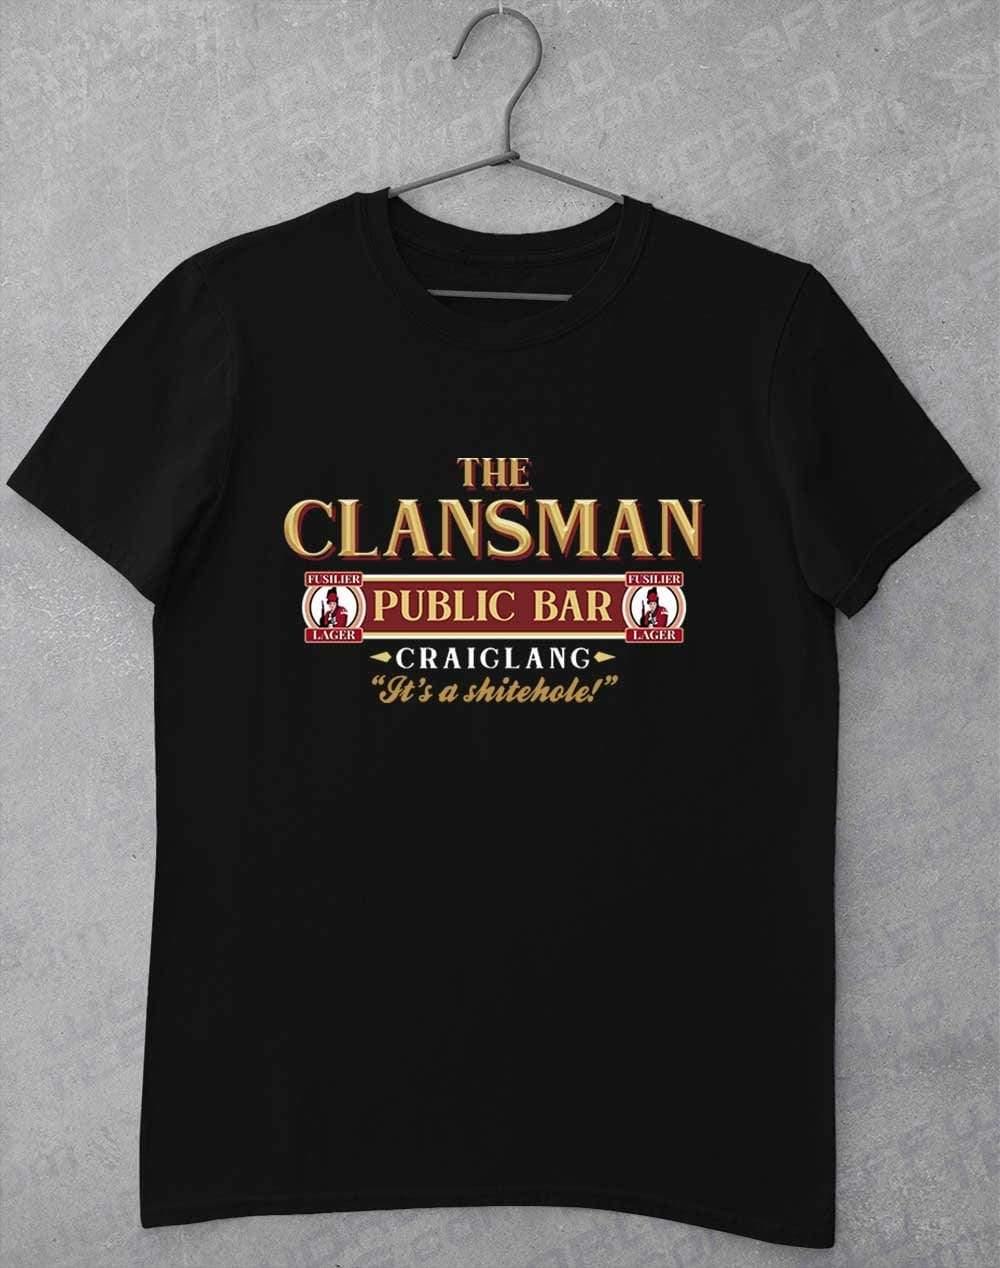 The Clansman Craiglang T-Shirt S / Black  - Off World Tees